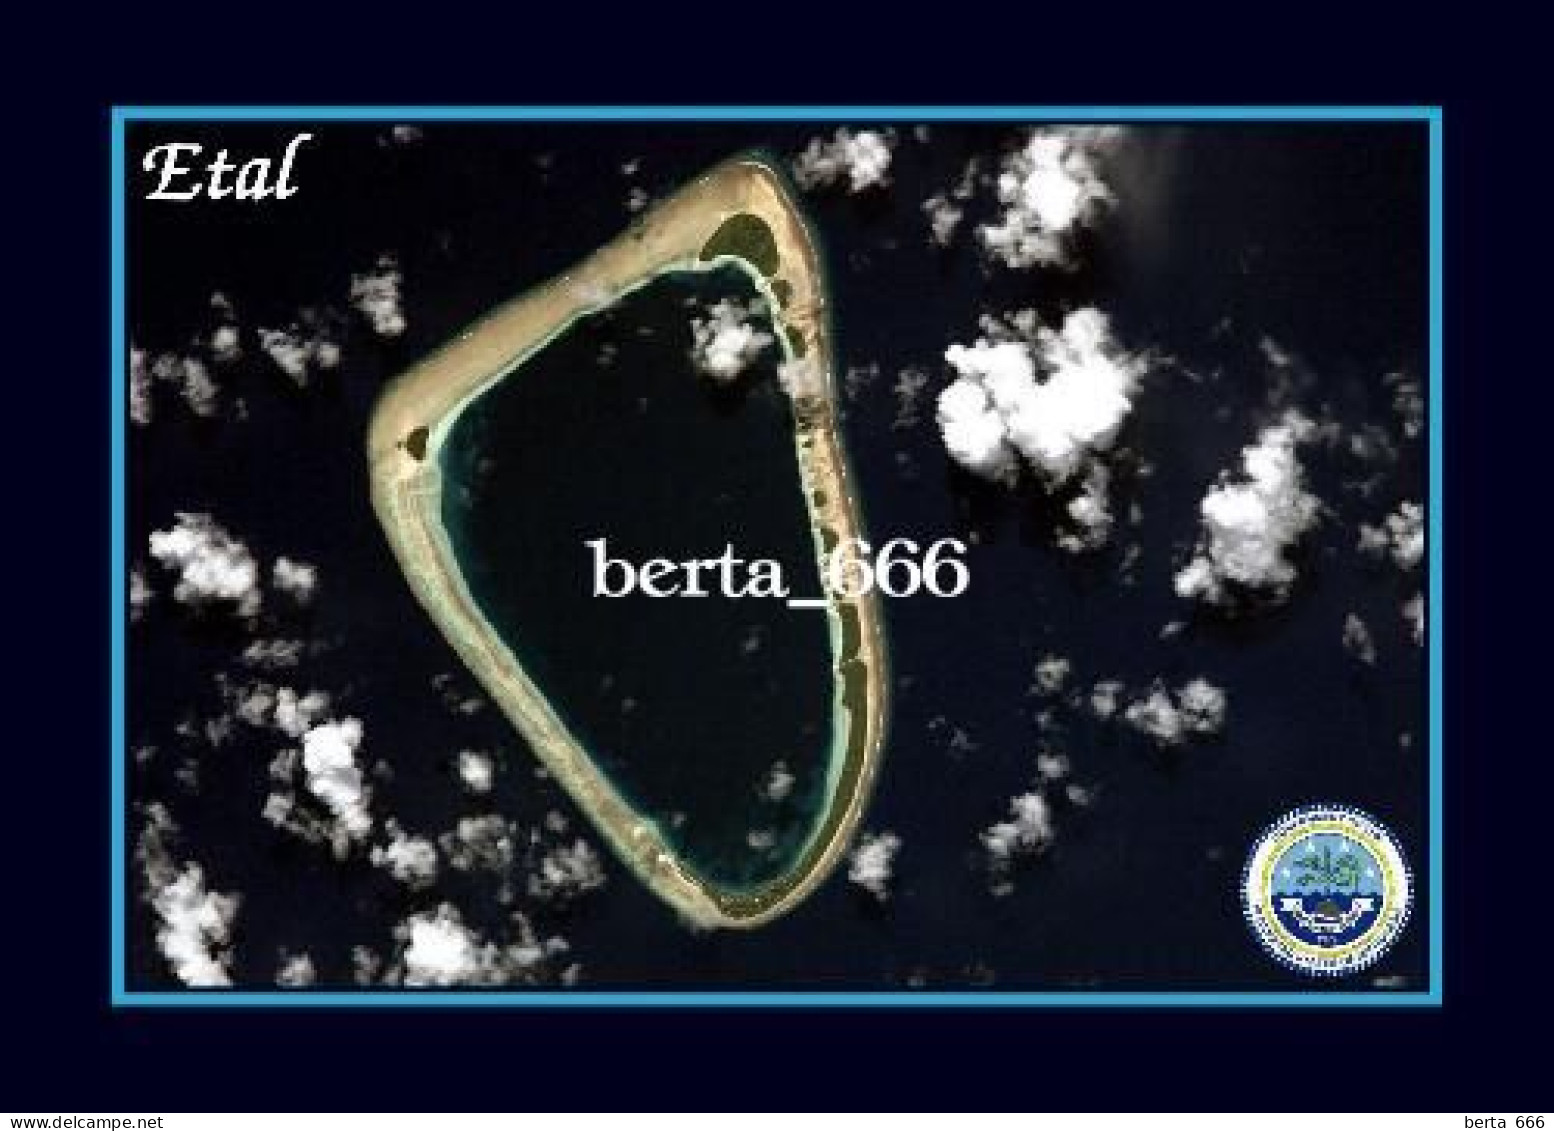 Micronesia Caroline Islands Etal Atoll New Postcard - Micronésie